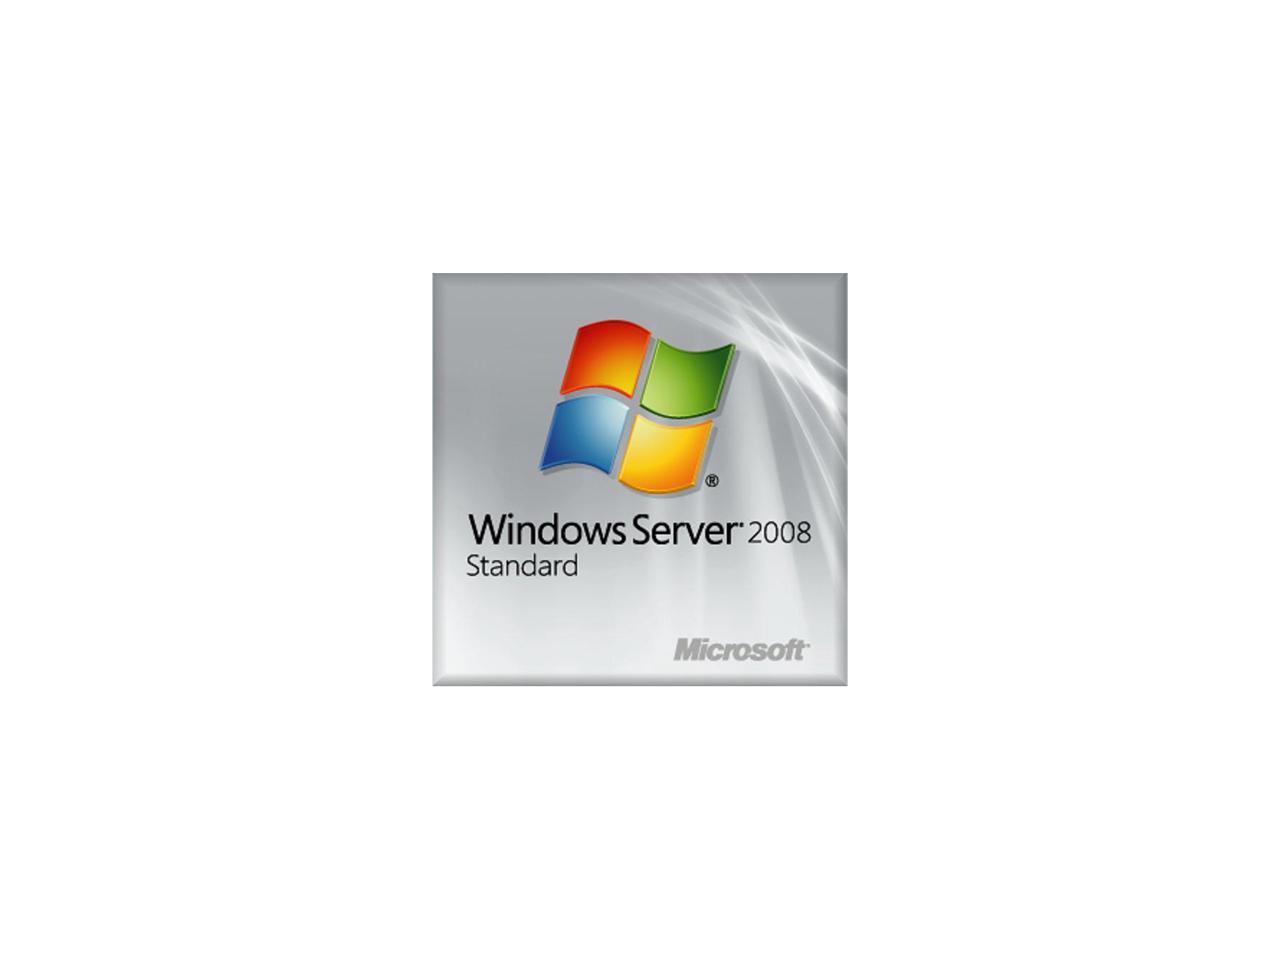 cve-2019-0708 windows server 2008 r2 64 bit